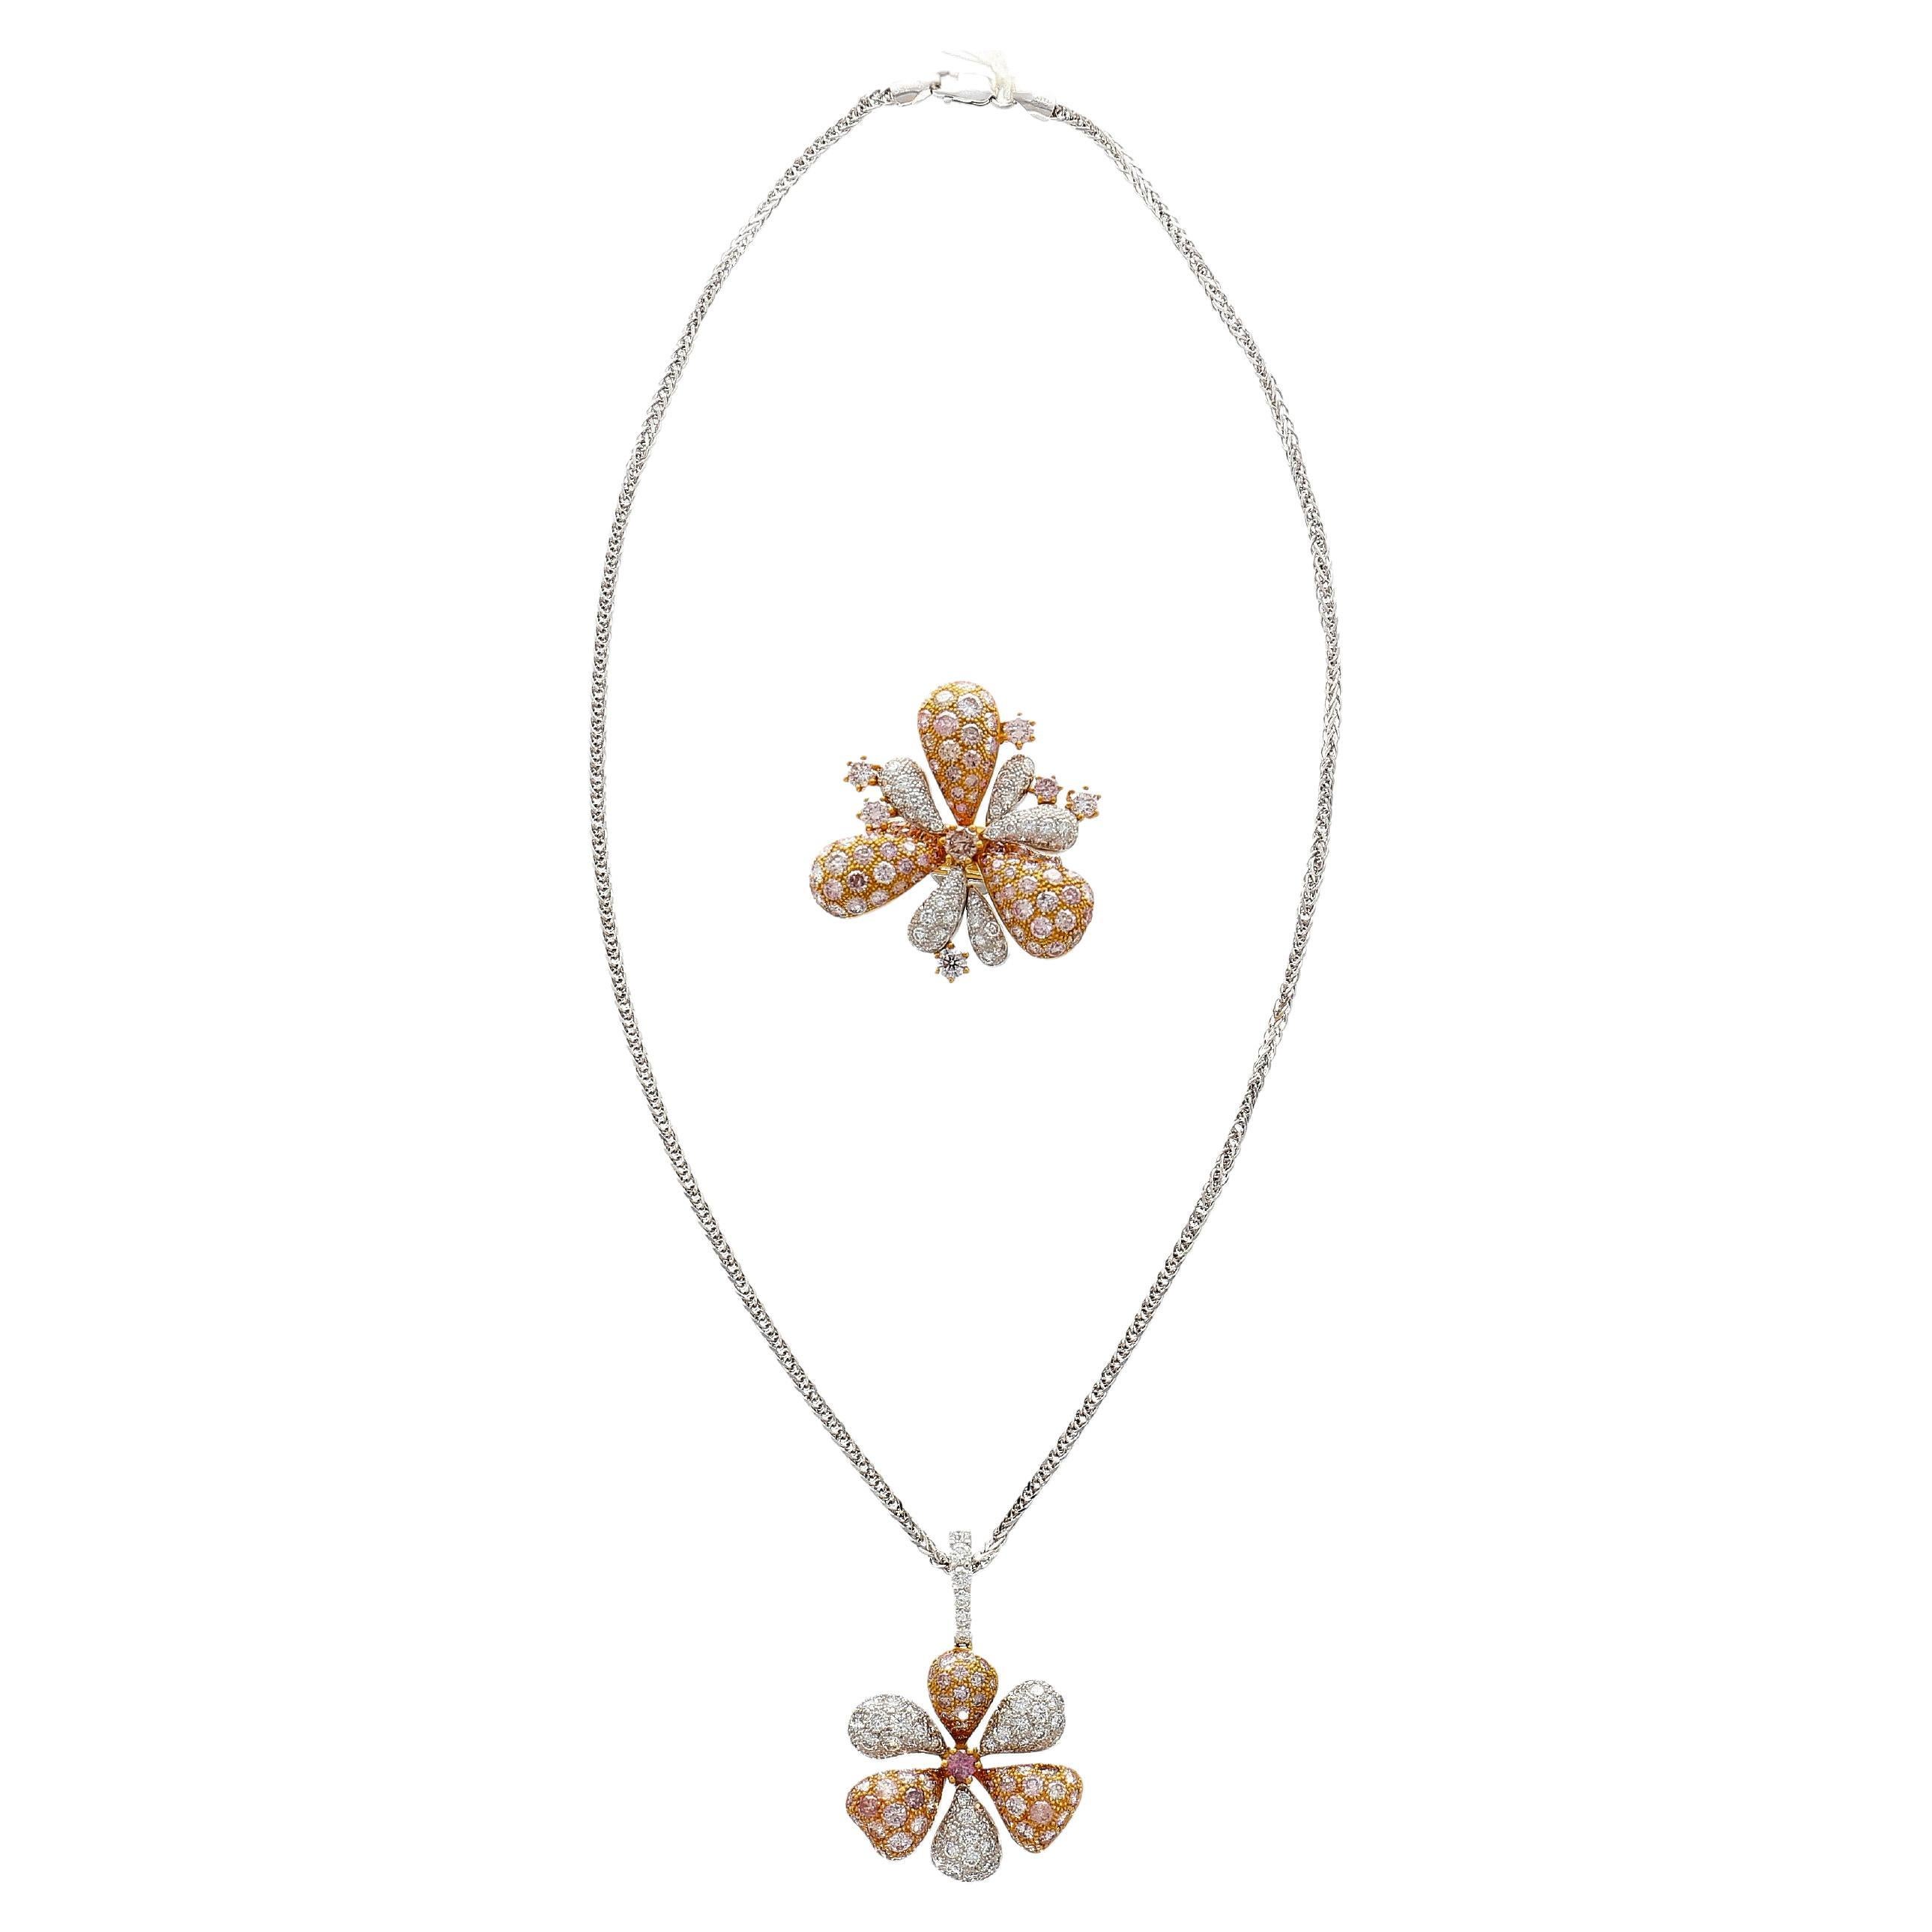 11.9 Carat Pink & White Diamond Pendant Necklace & Ring Flower Motif Jewelry Set